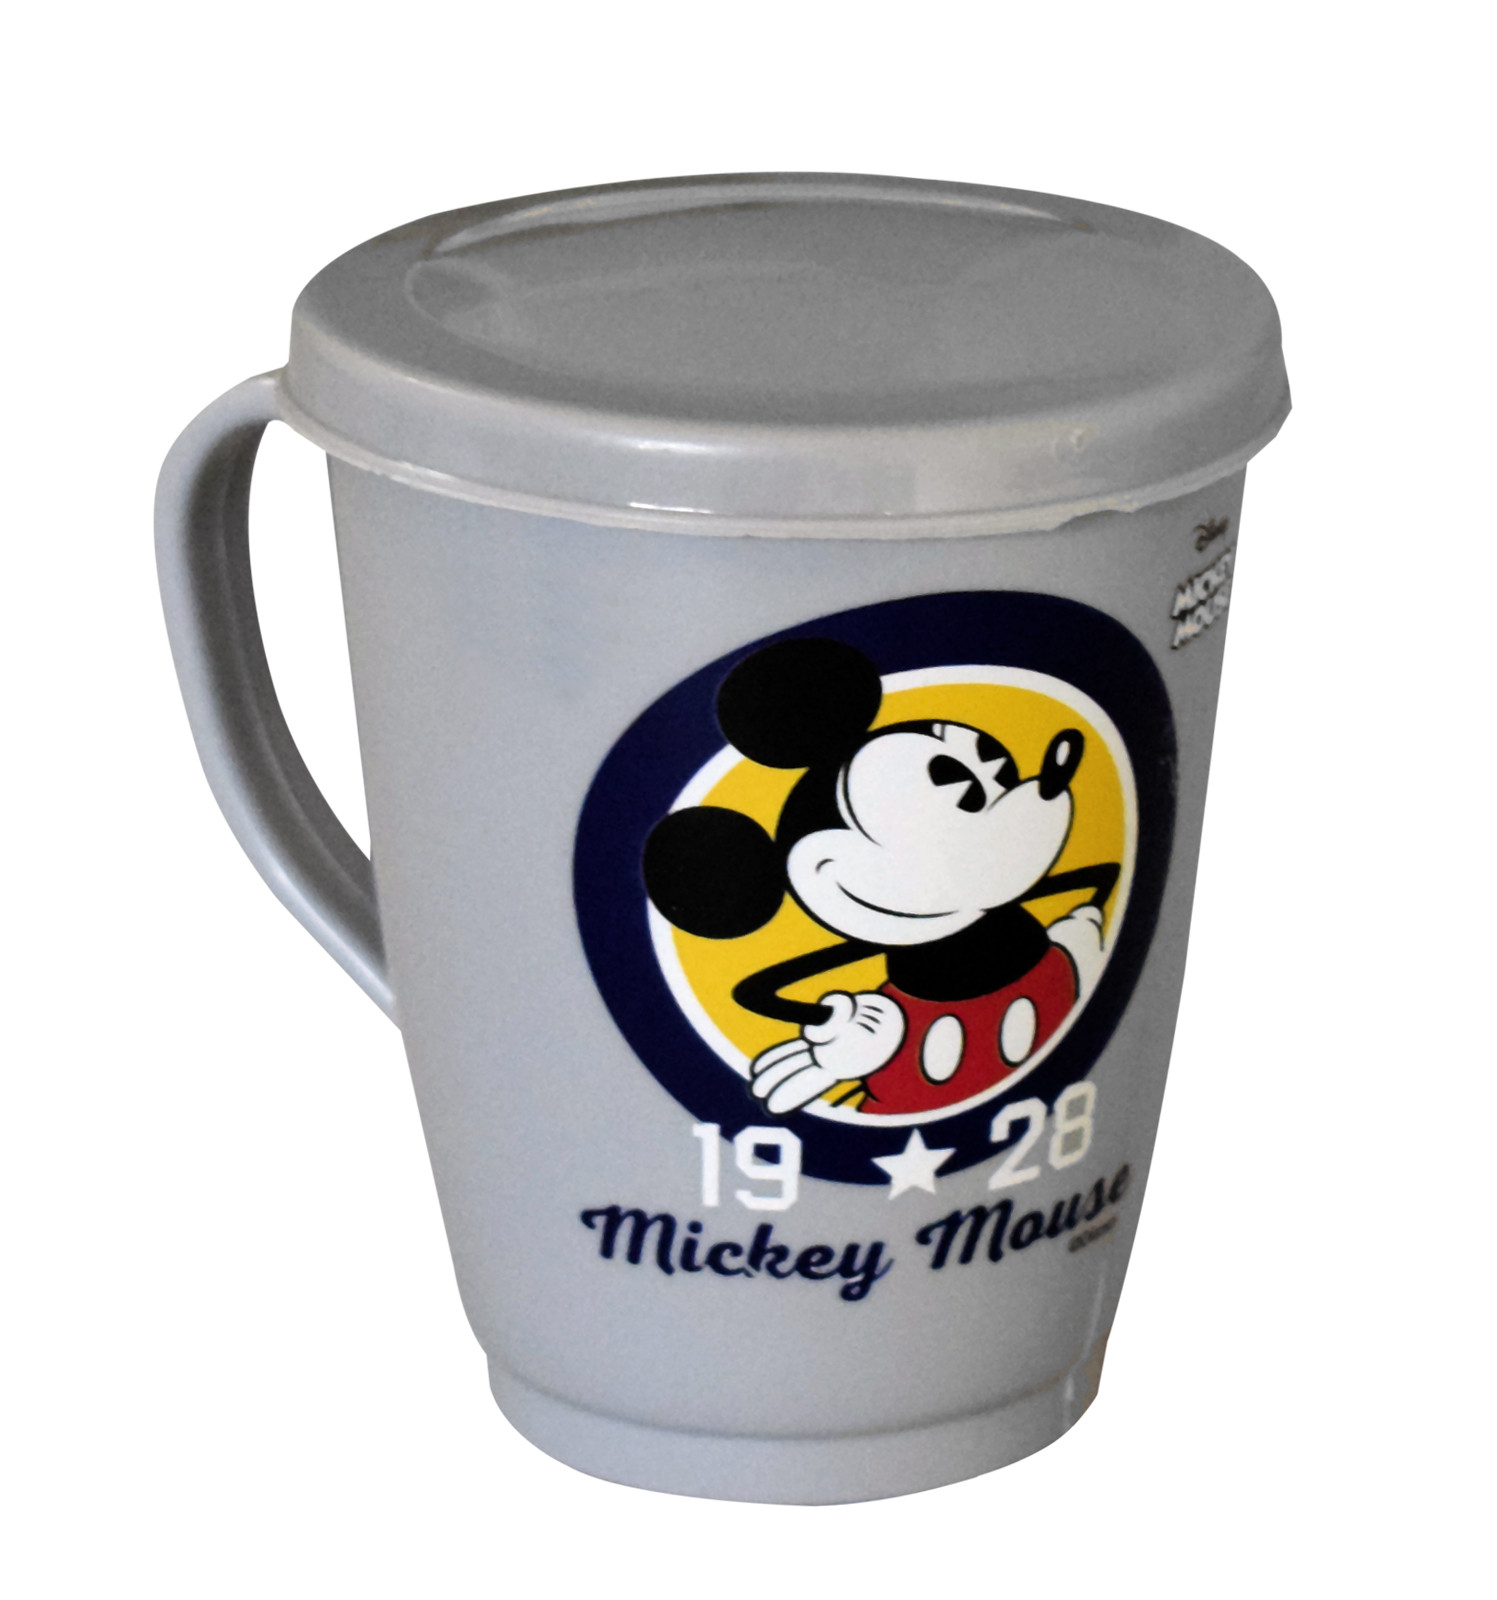 Kuber Industries Disney Printed Food Grade BPA Free Tea/Coffee Mug for Coffee Tea Cocoa, Camping Mugs with Lid, Pack of 6 (Light Grey & Grey & Red)